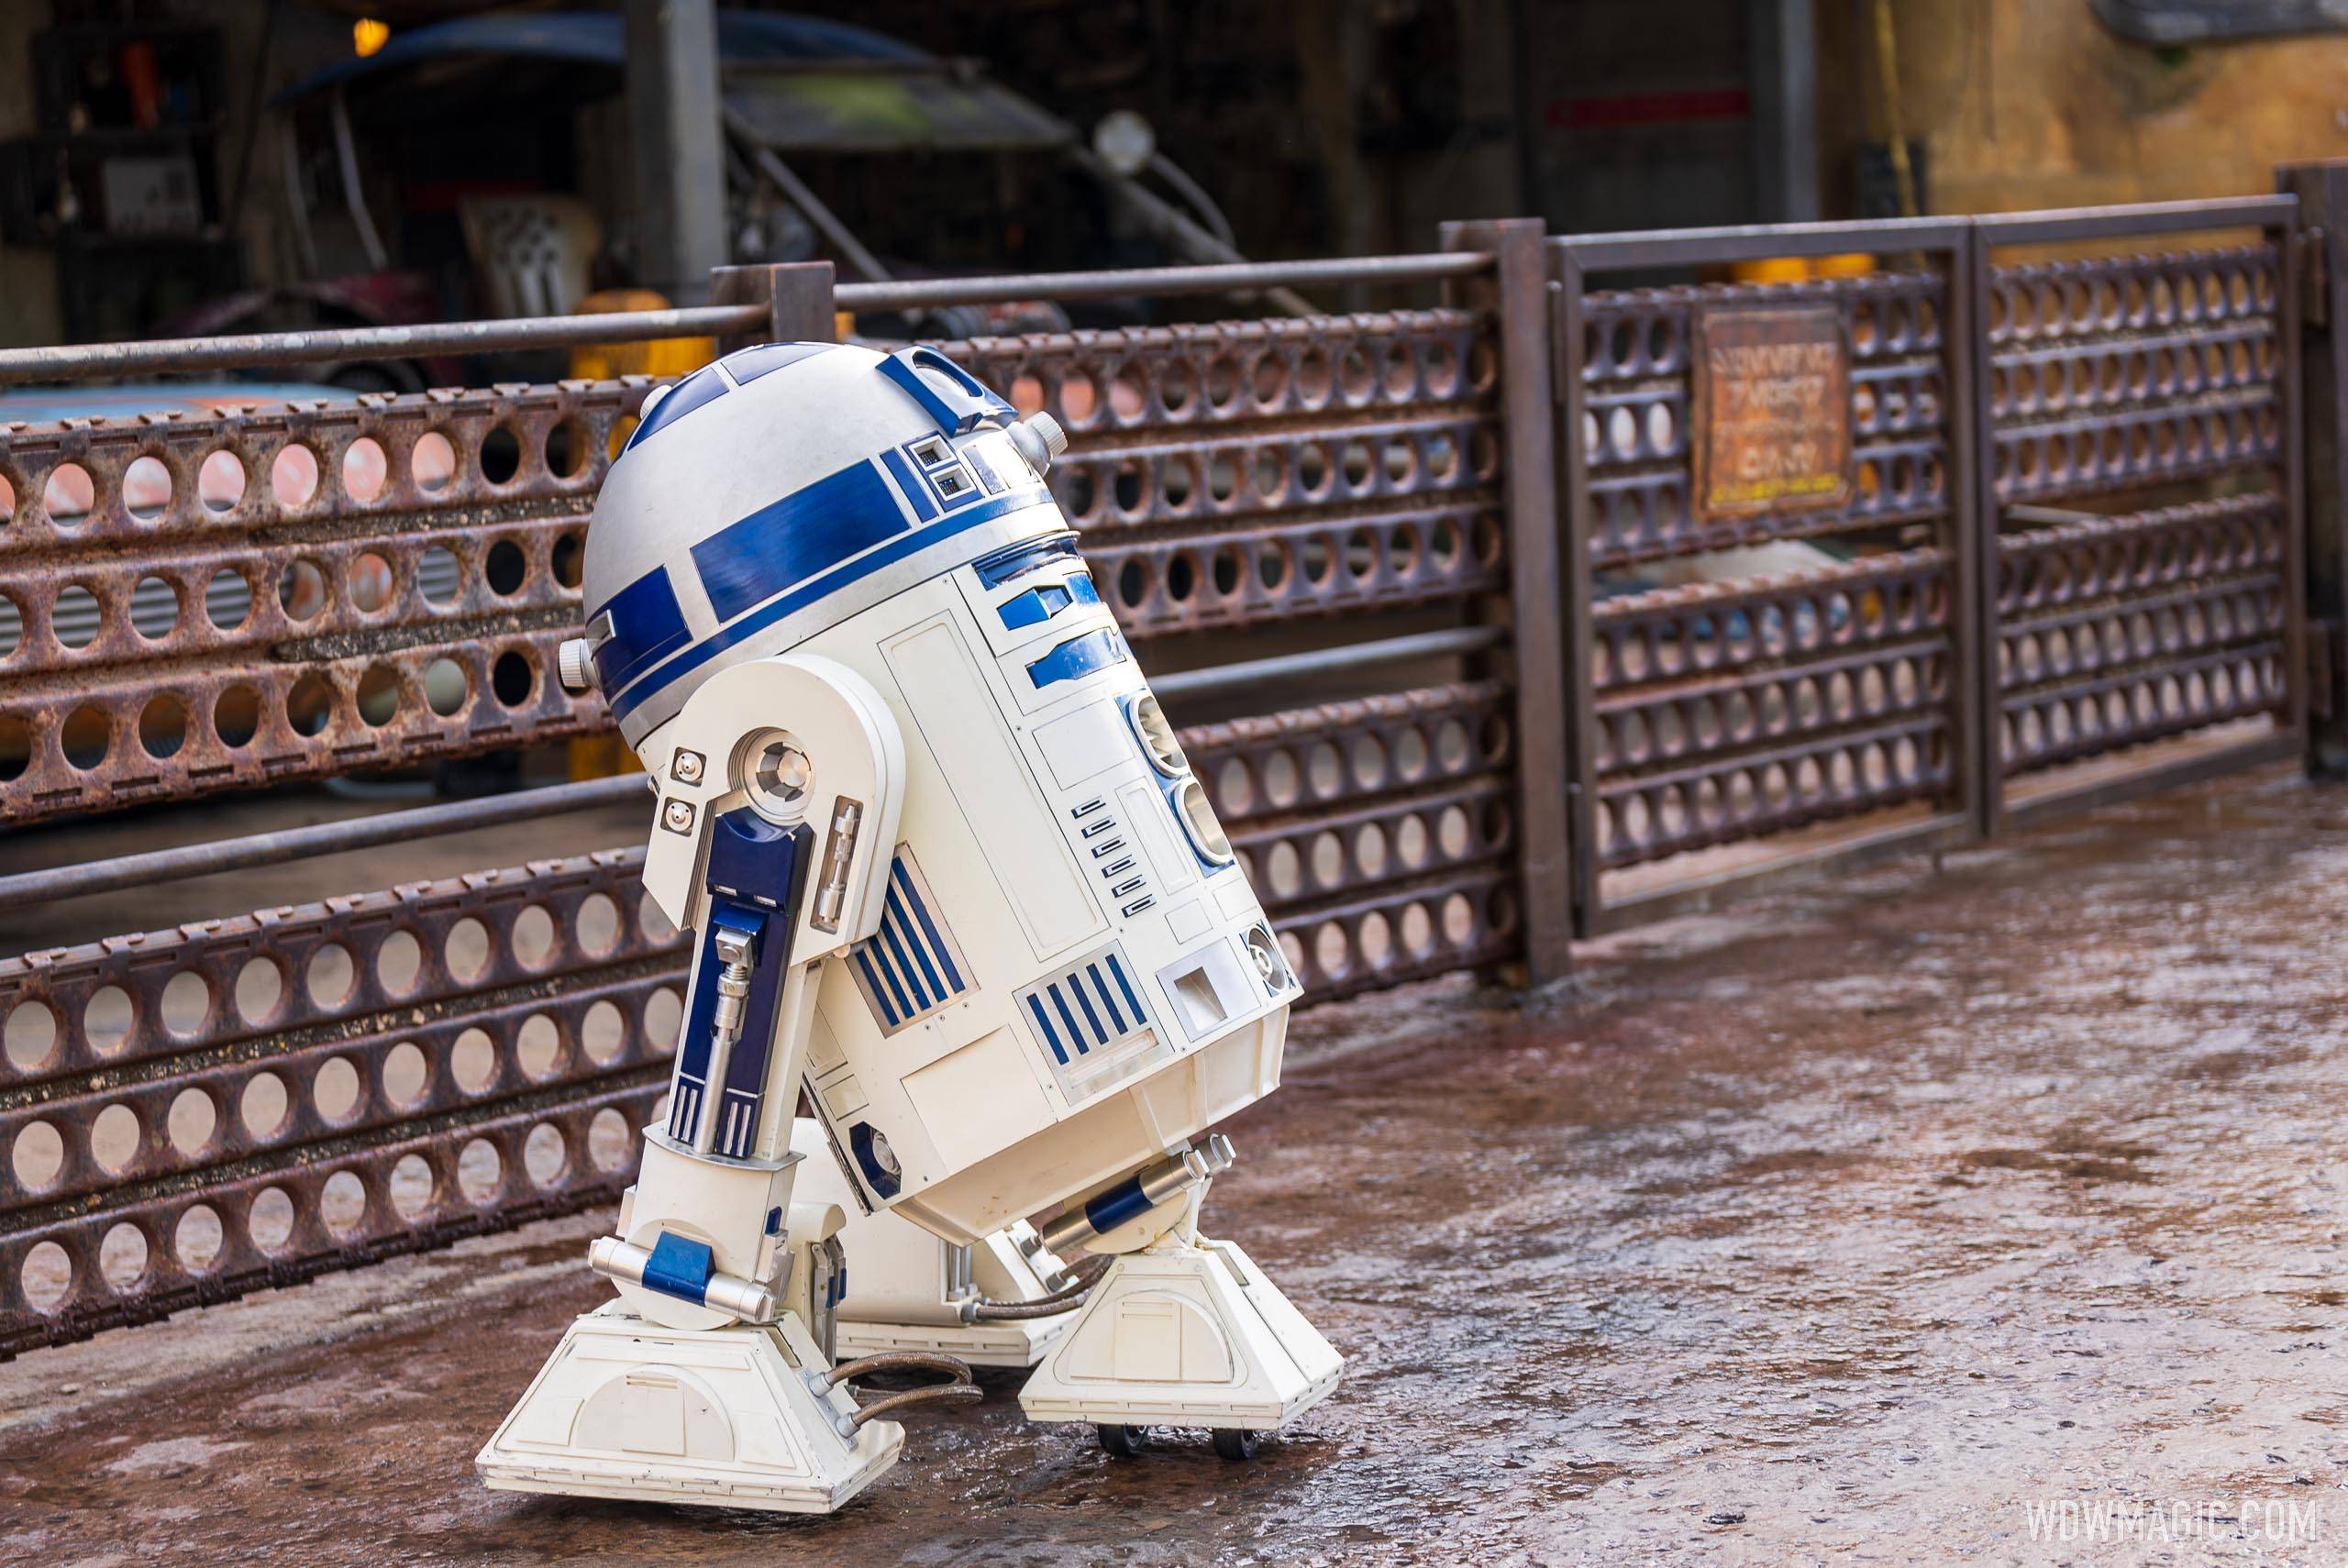 R2-D2 meets guests at Star Wars Galaxy's Edge in Walt Disney World